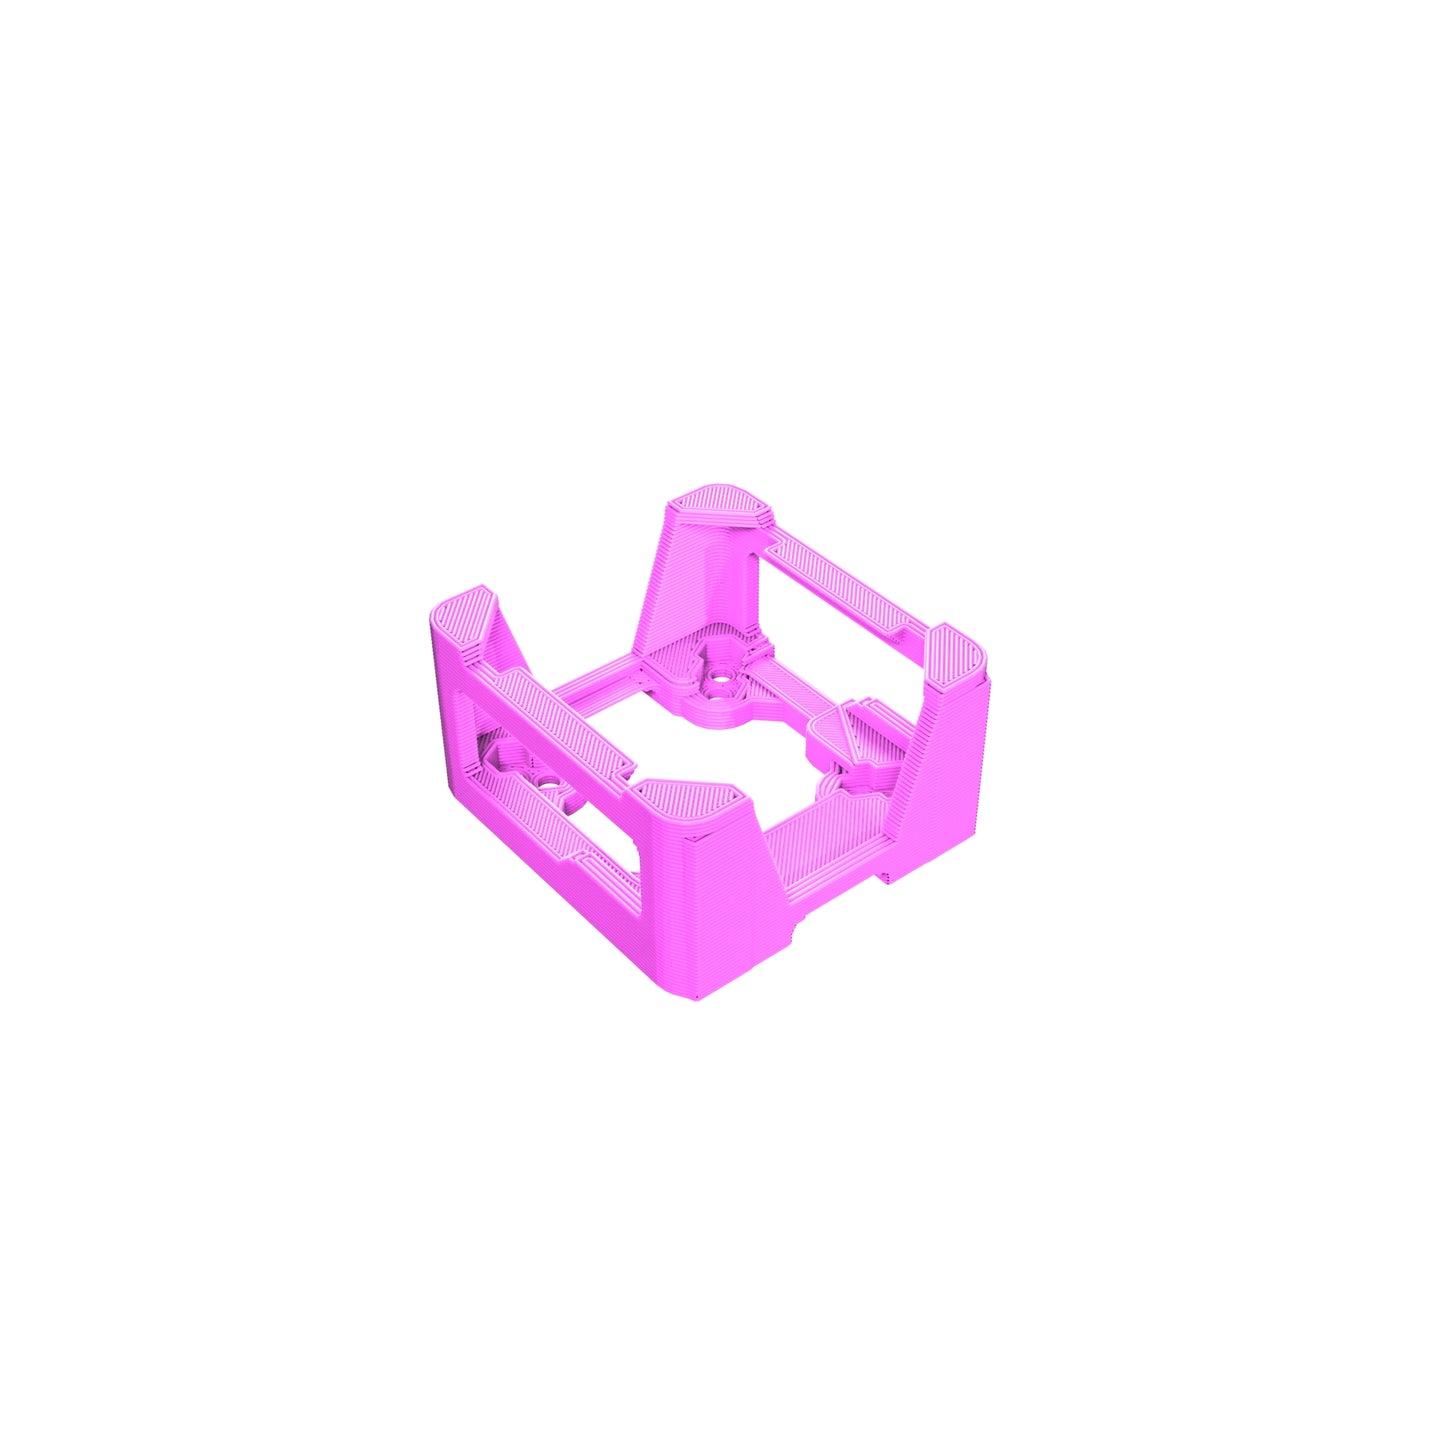 FPV DJI O3 20x20 and 25.5x25.5 Mounting Adapter Case 3D Printed TPU Pink